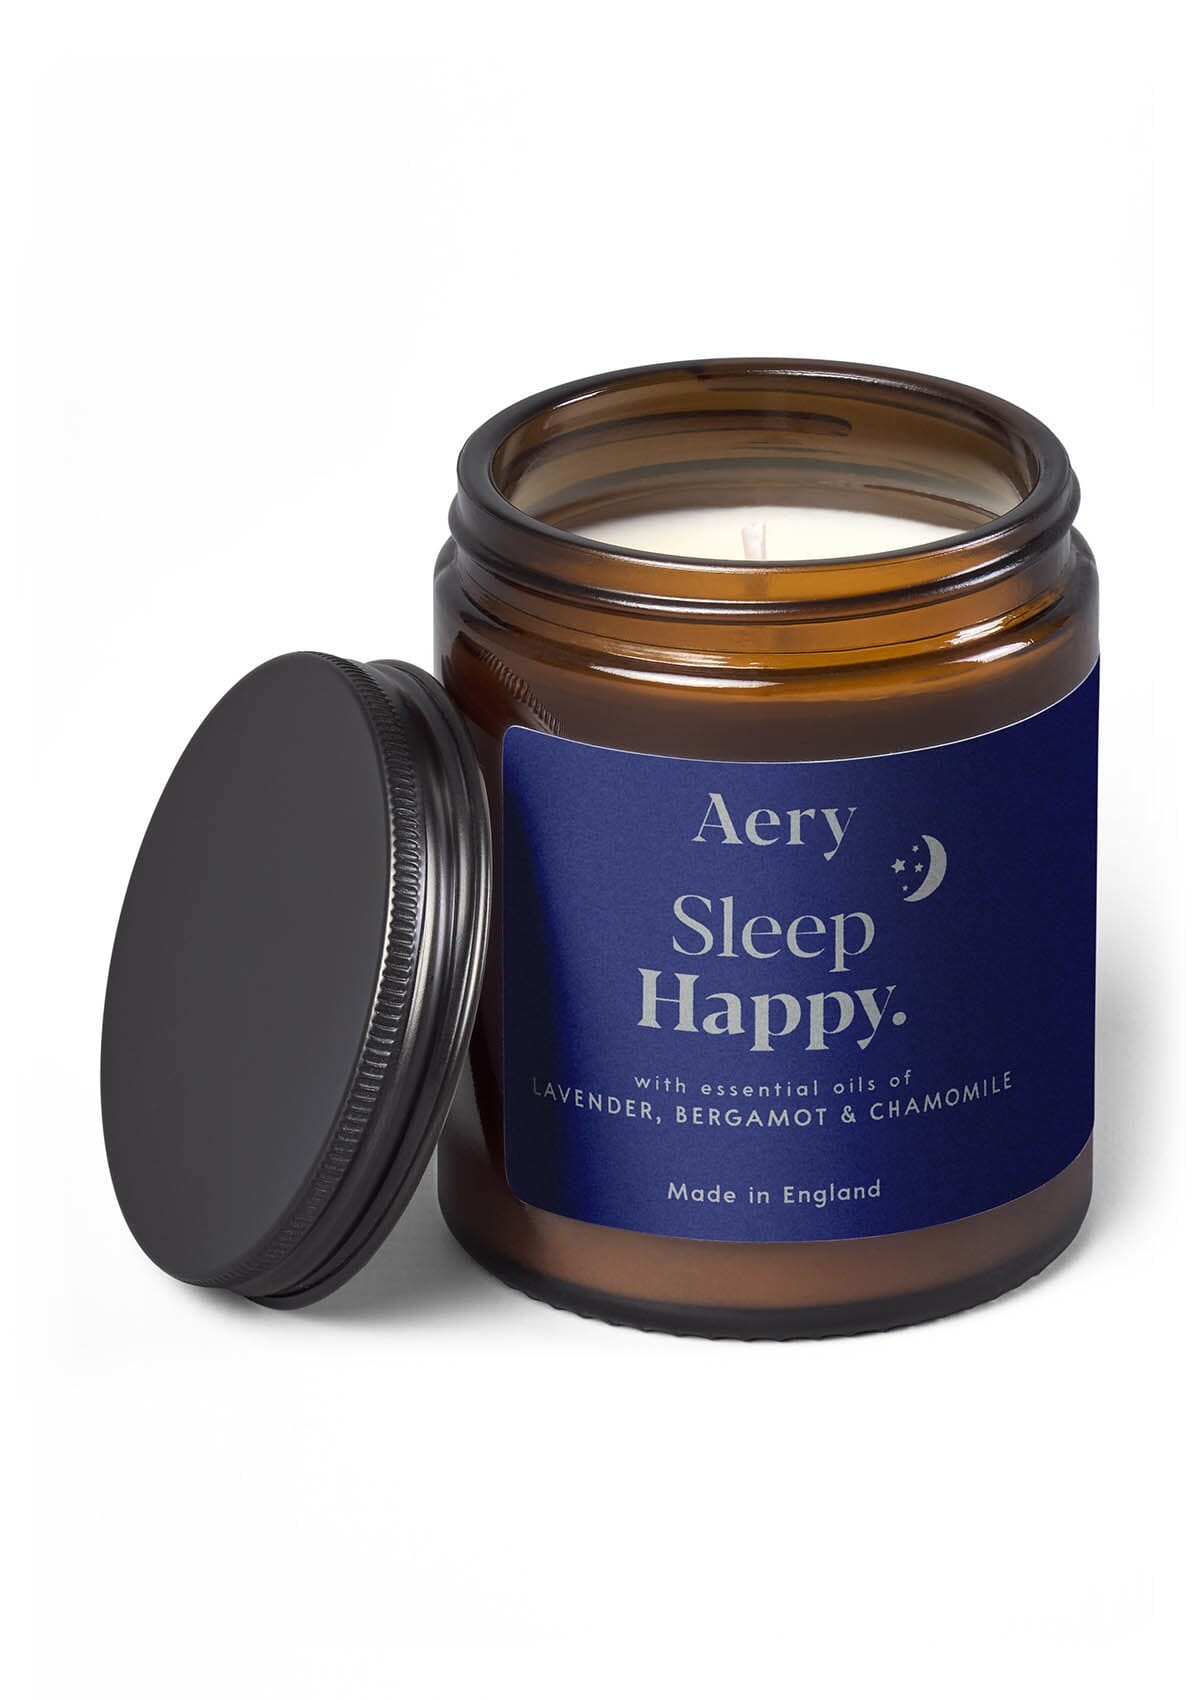 Blue Sleep Happy jar candle by Aery on white background 